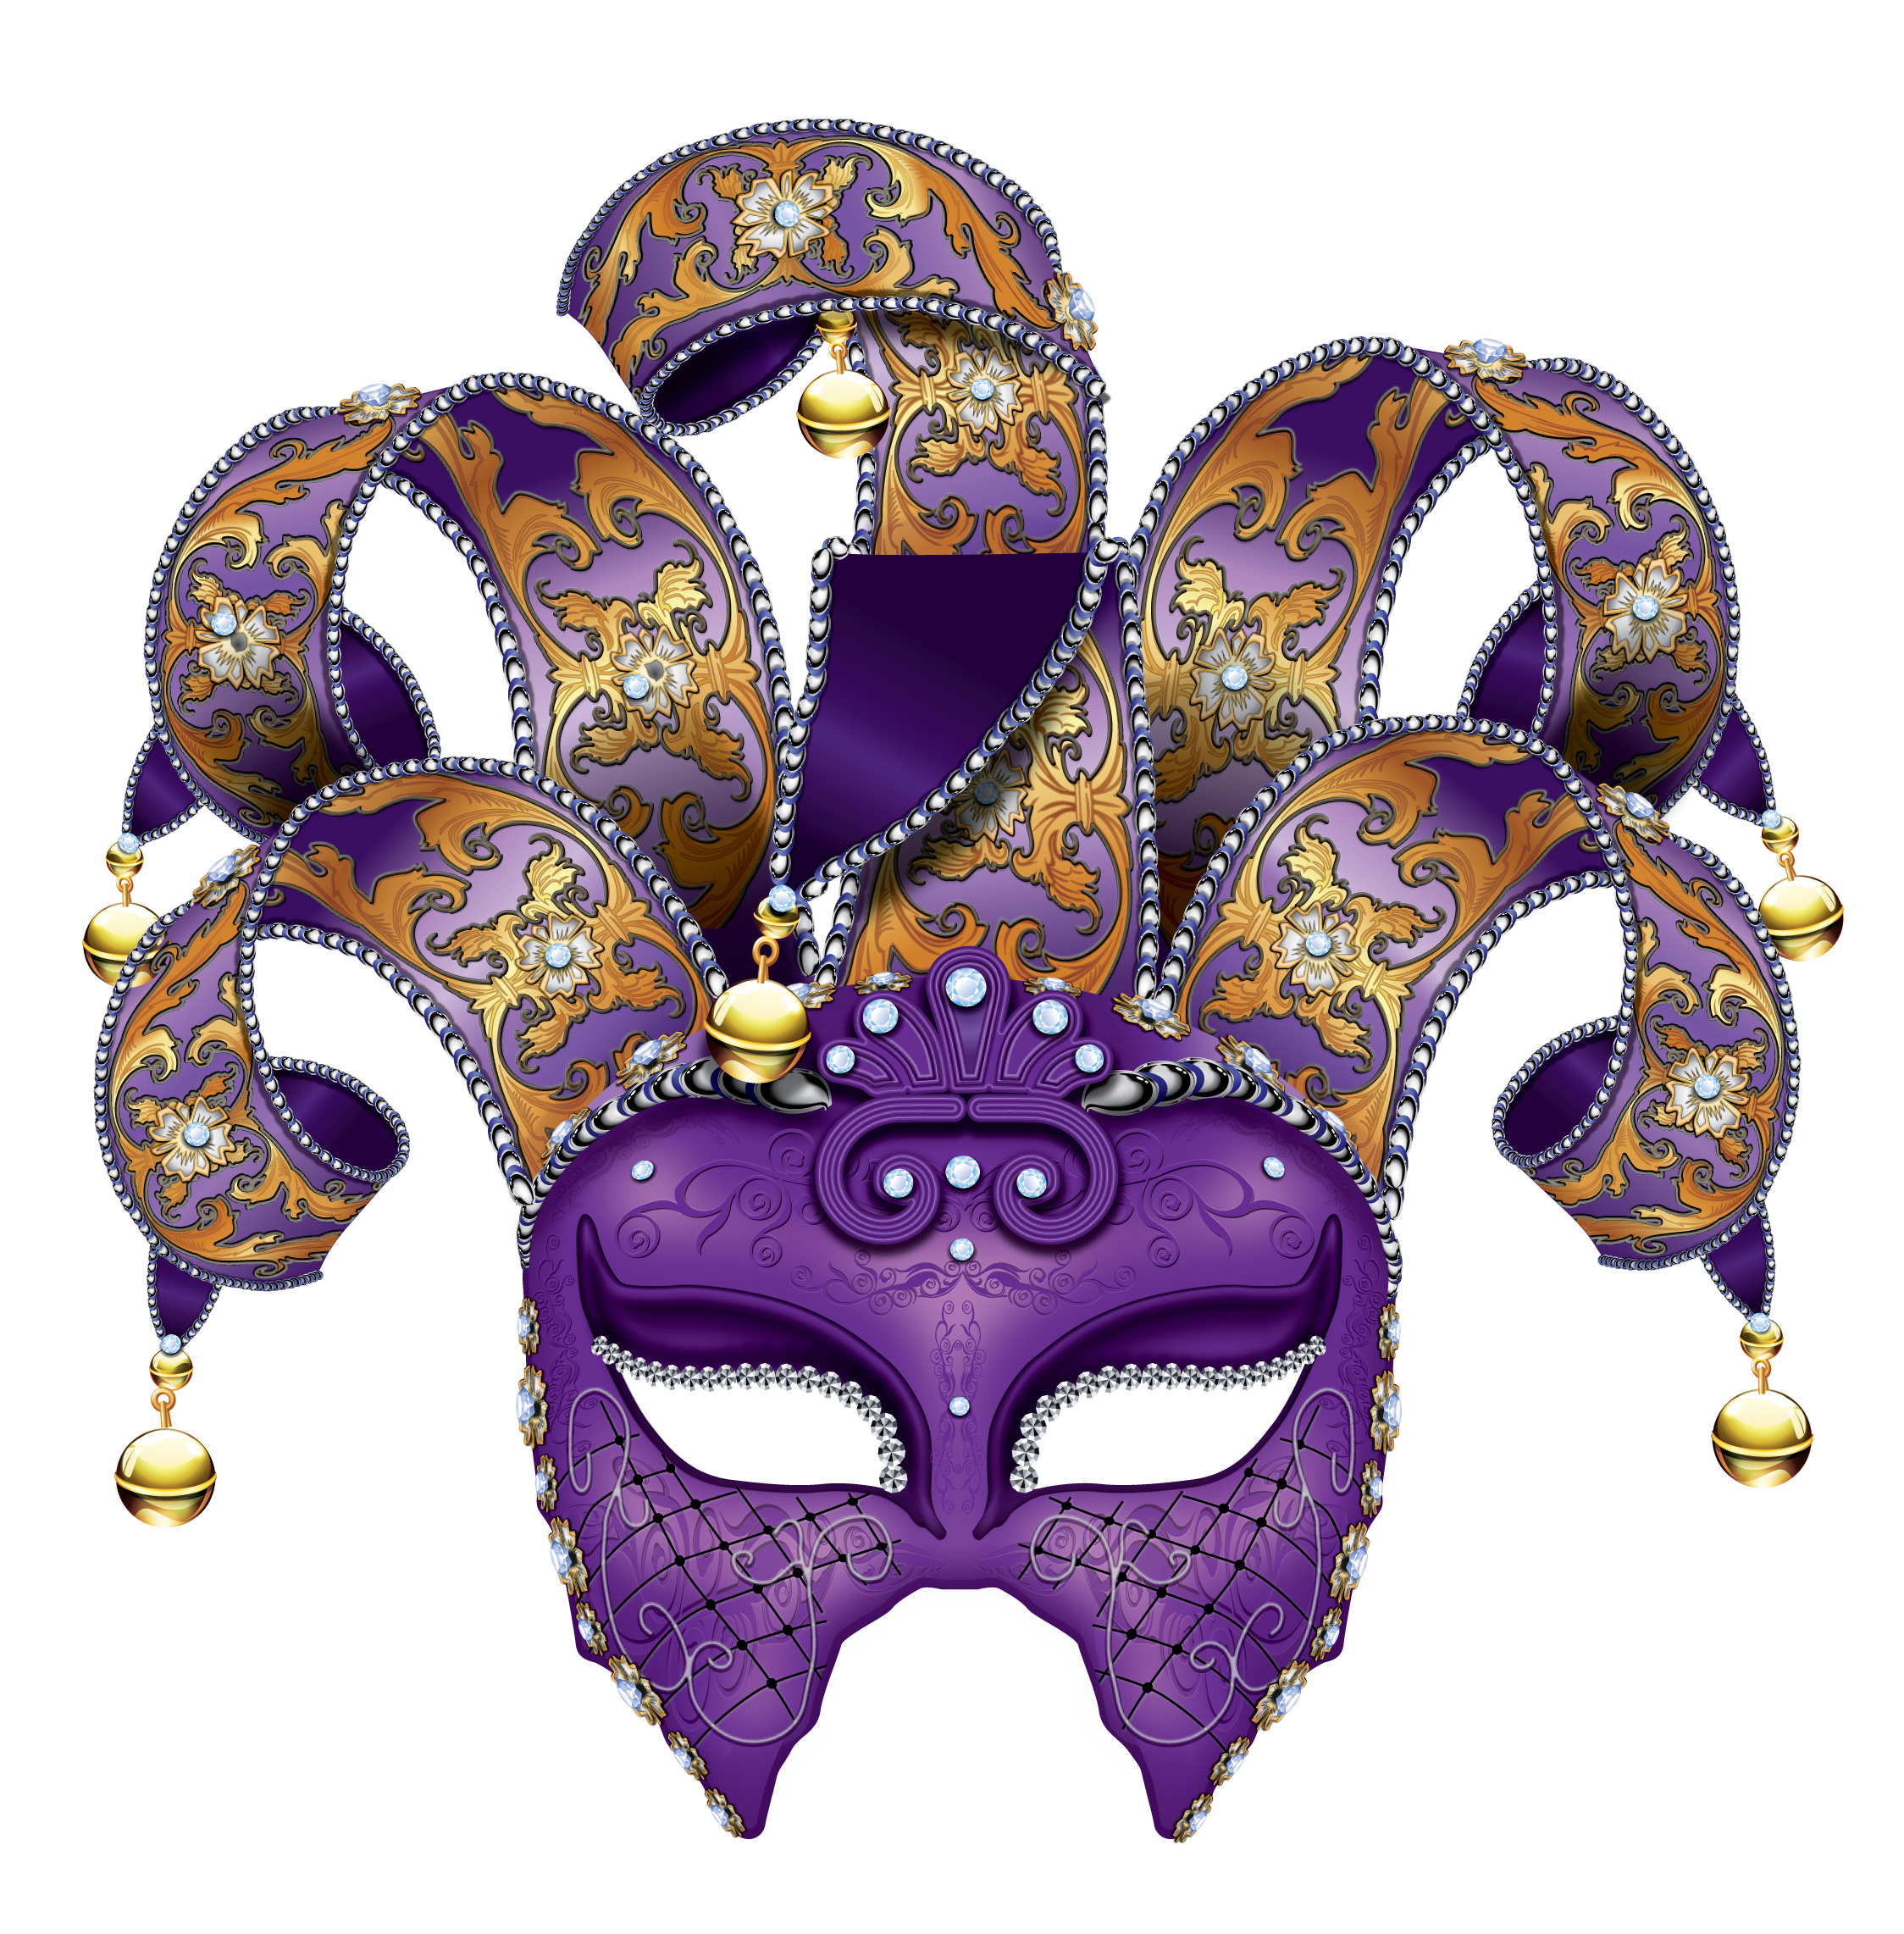 Mardi Gras Mask Vector Free Download at GetDrawings Free download